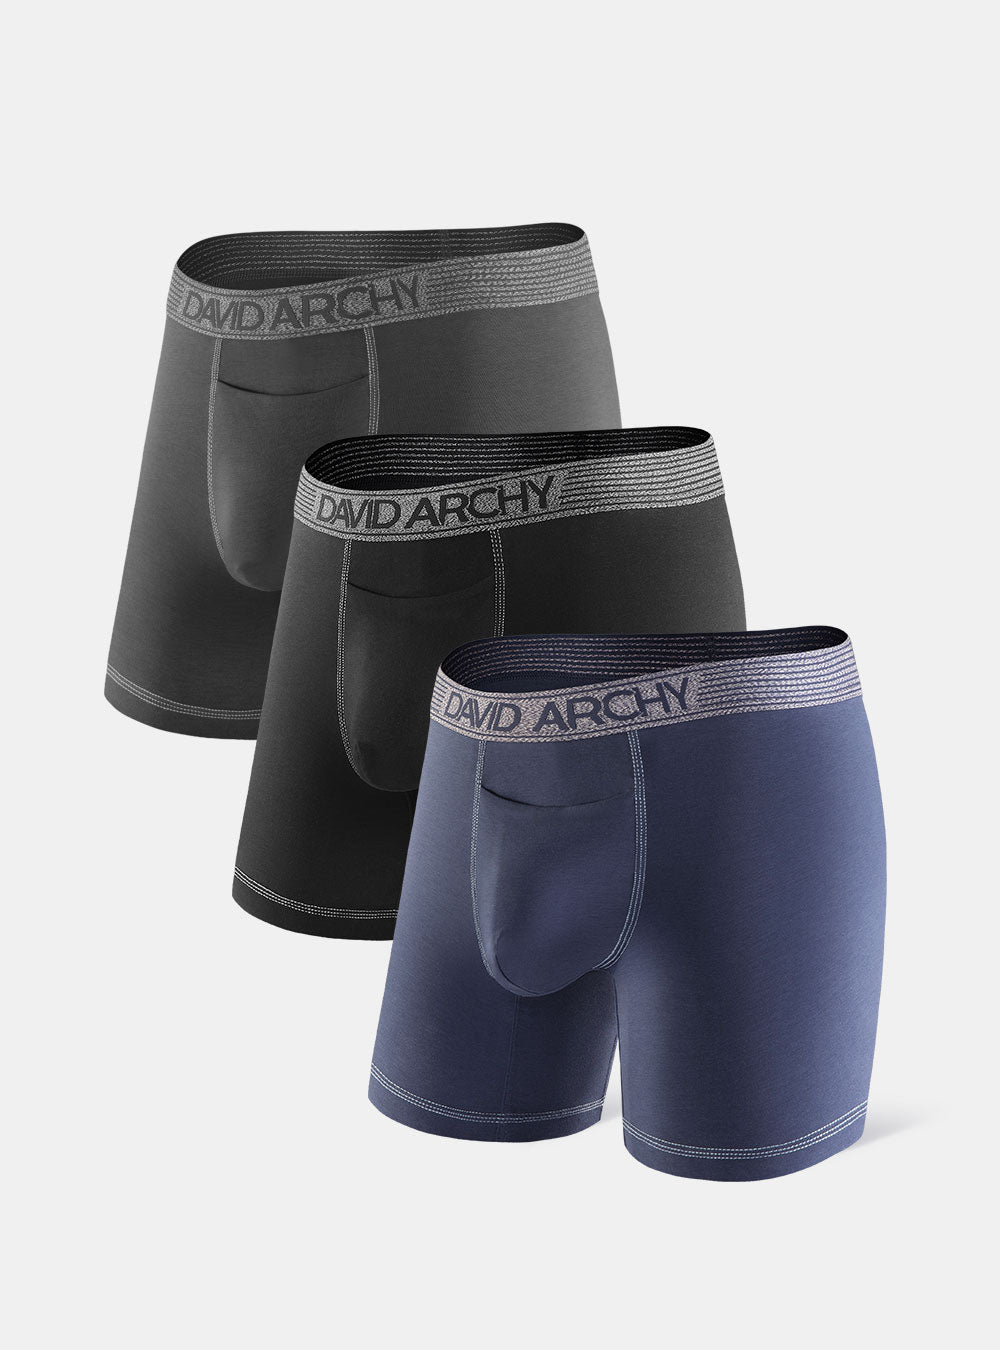 3 Packs Boxer Briefs Quick Dry Sports David Archy Men's Ultra Soft Mesh  Boxer Shorts Underwear